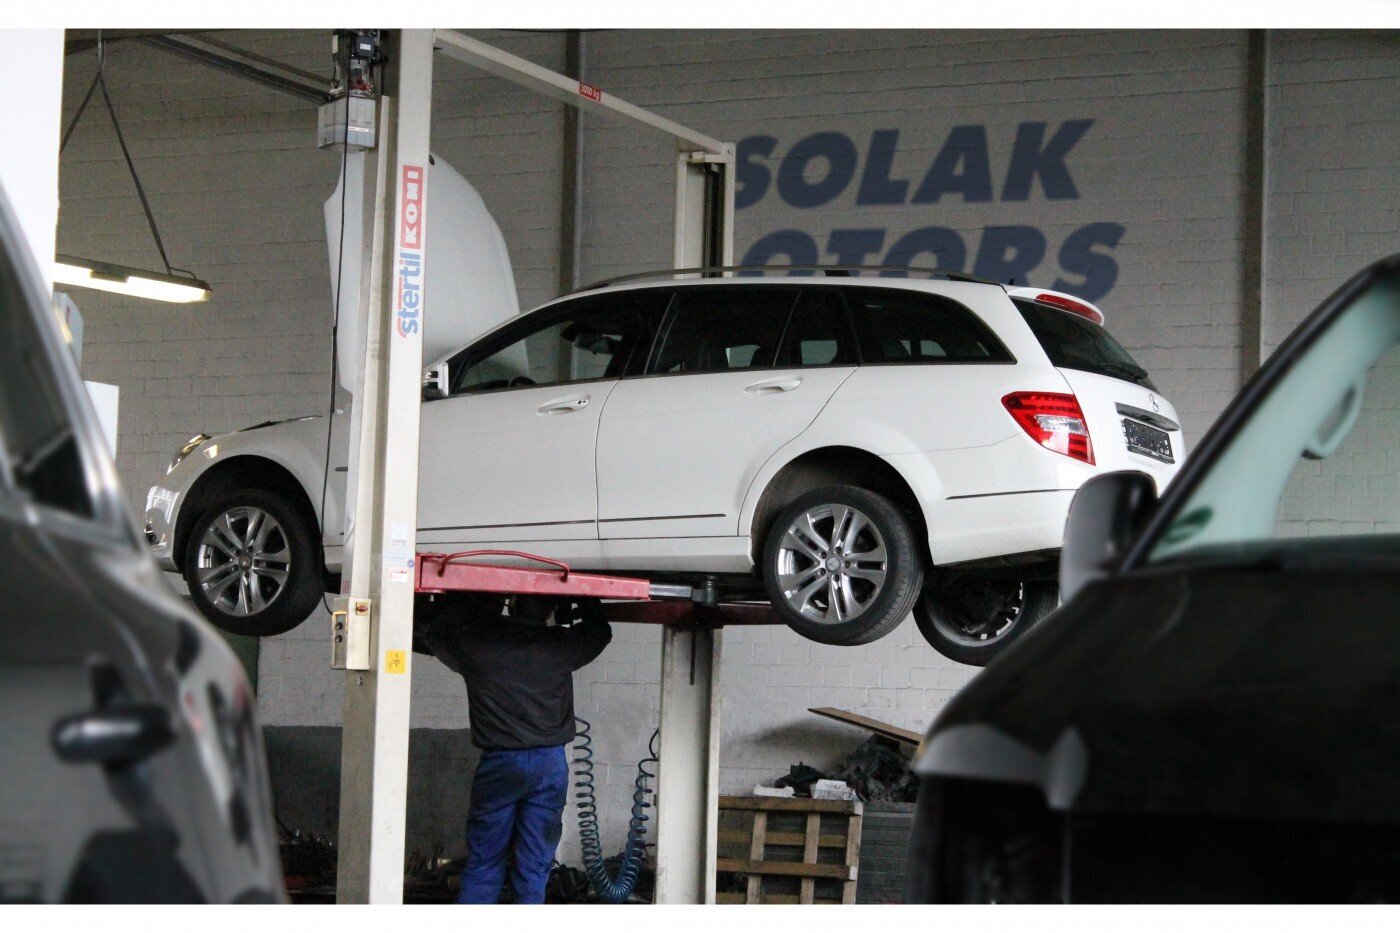 Bilder Solak Motors